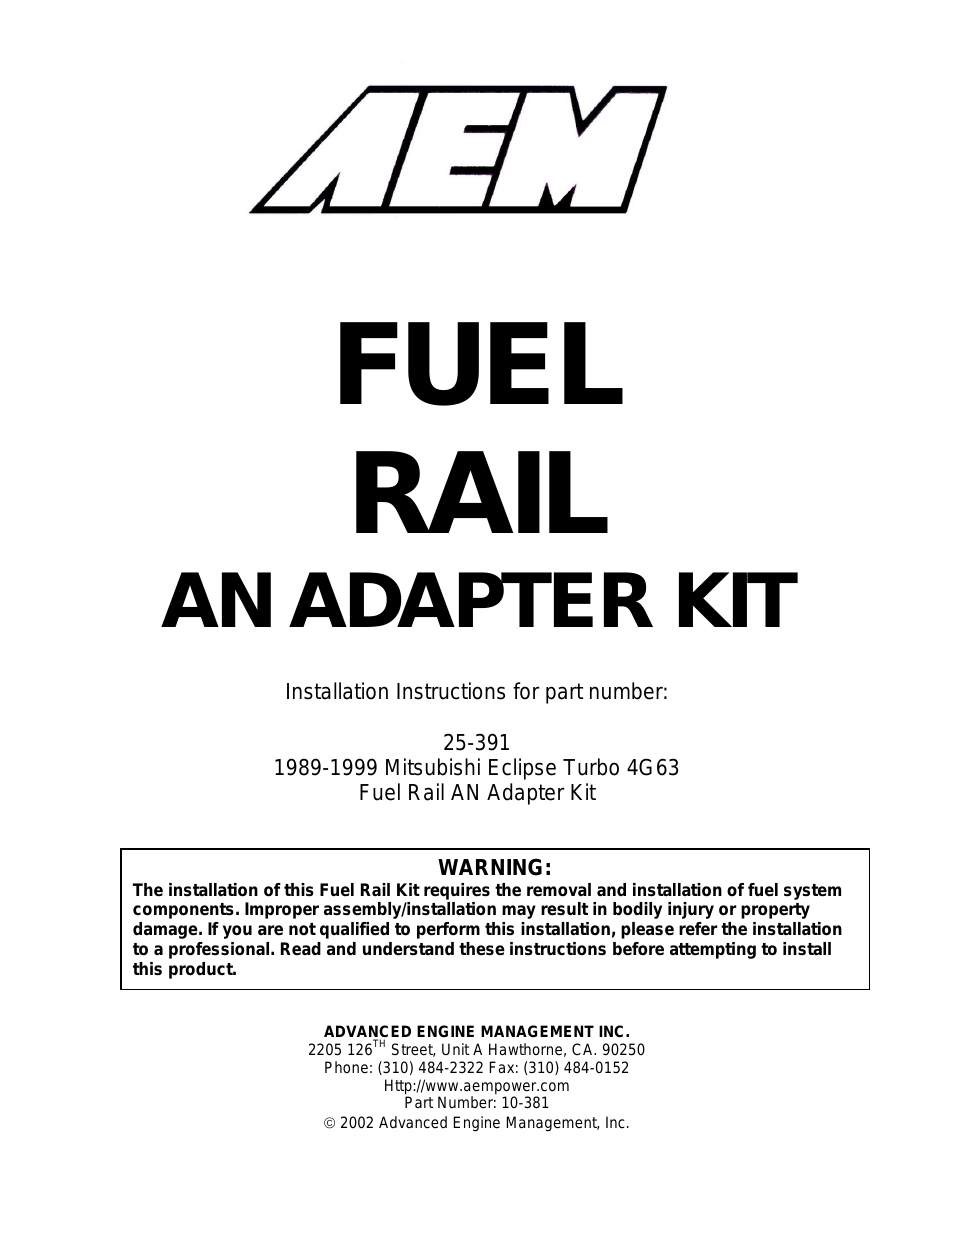 25-391 High Volume Fuel Rail AN Adapter Kit